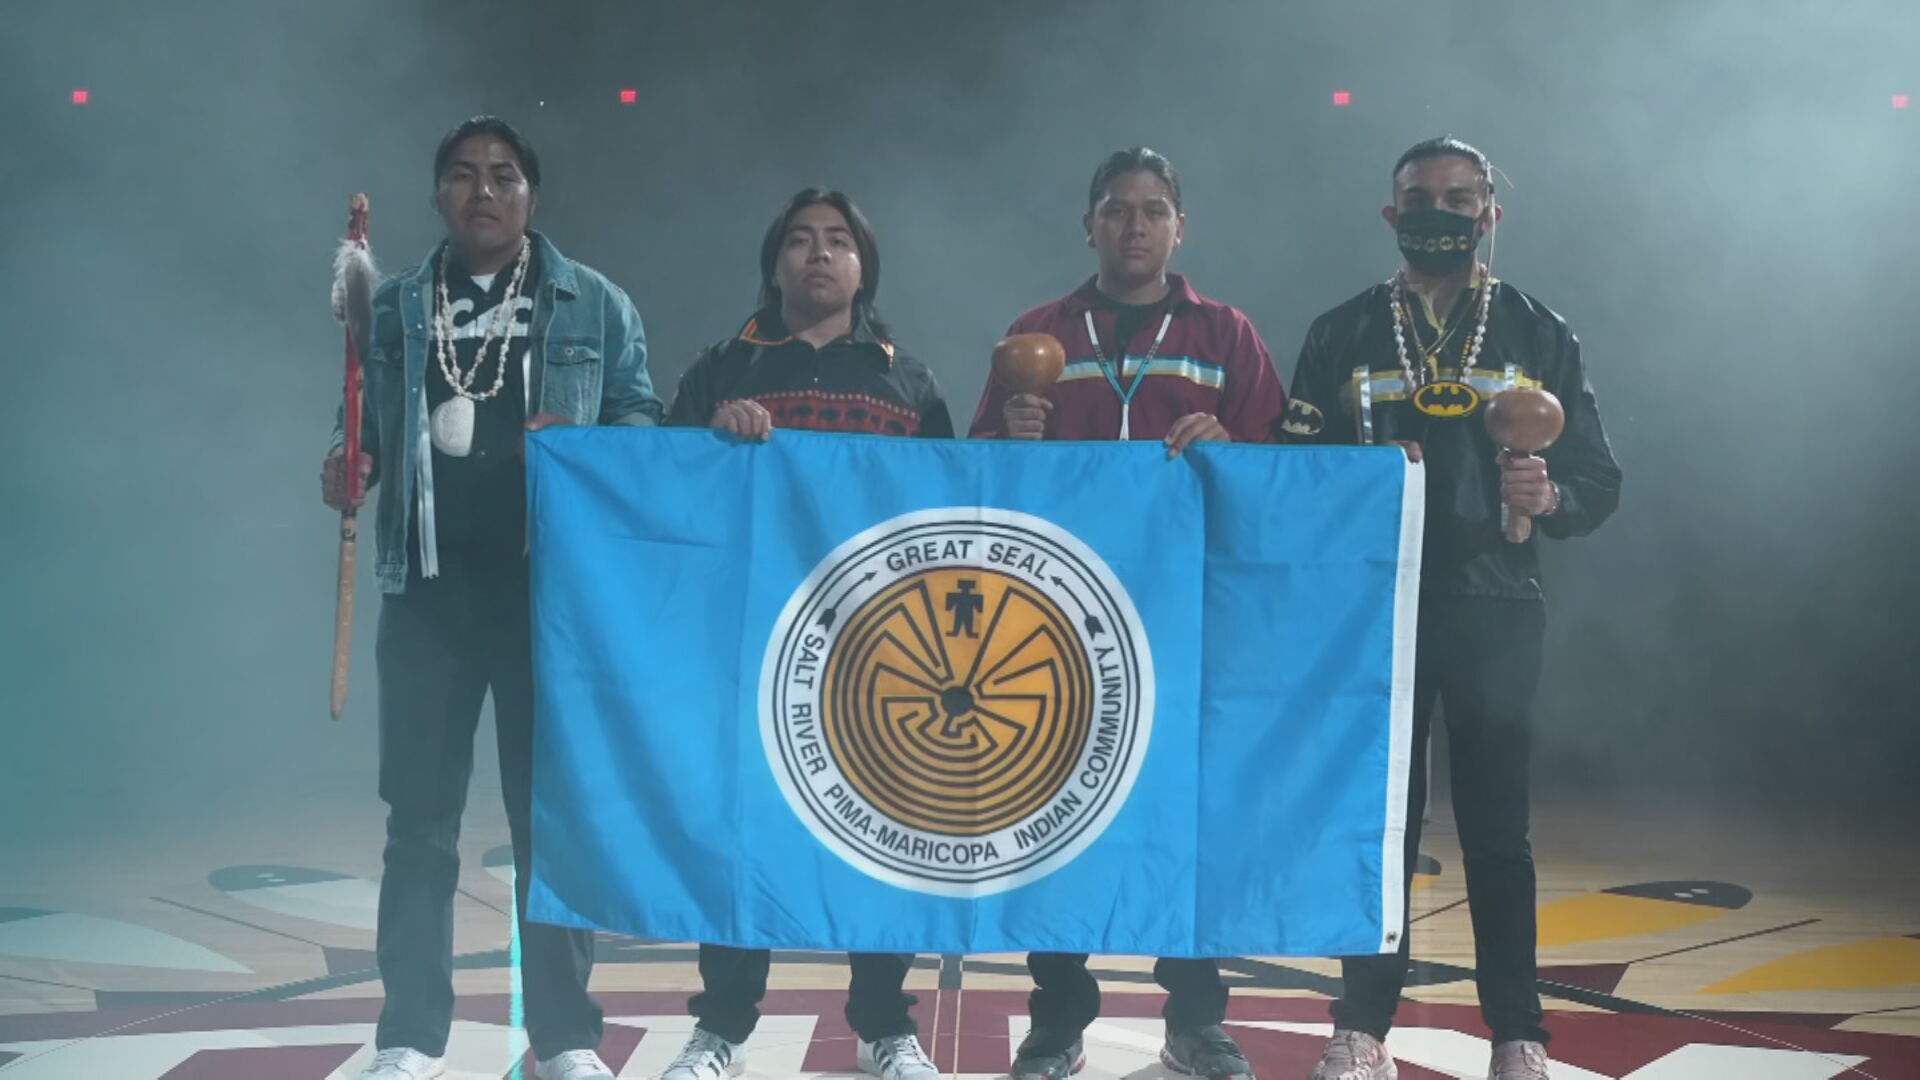 New Phoenix Suns jersey pays tribute to 22 AZ tribal nations